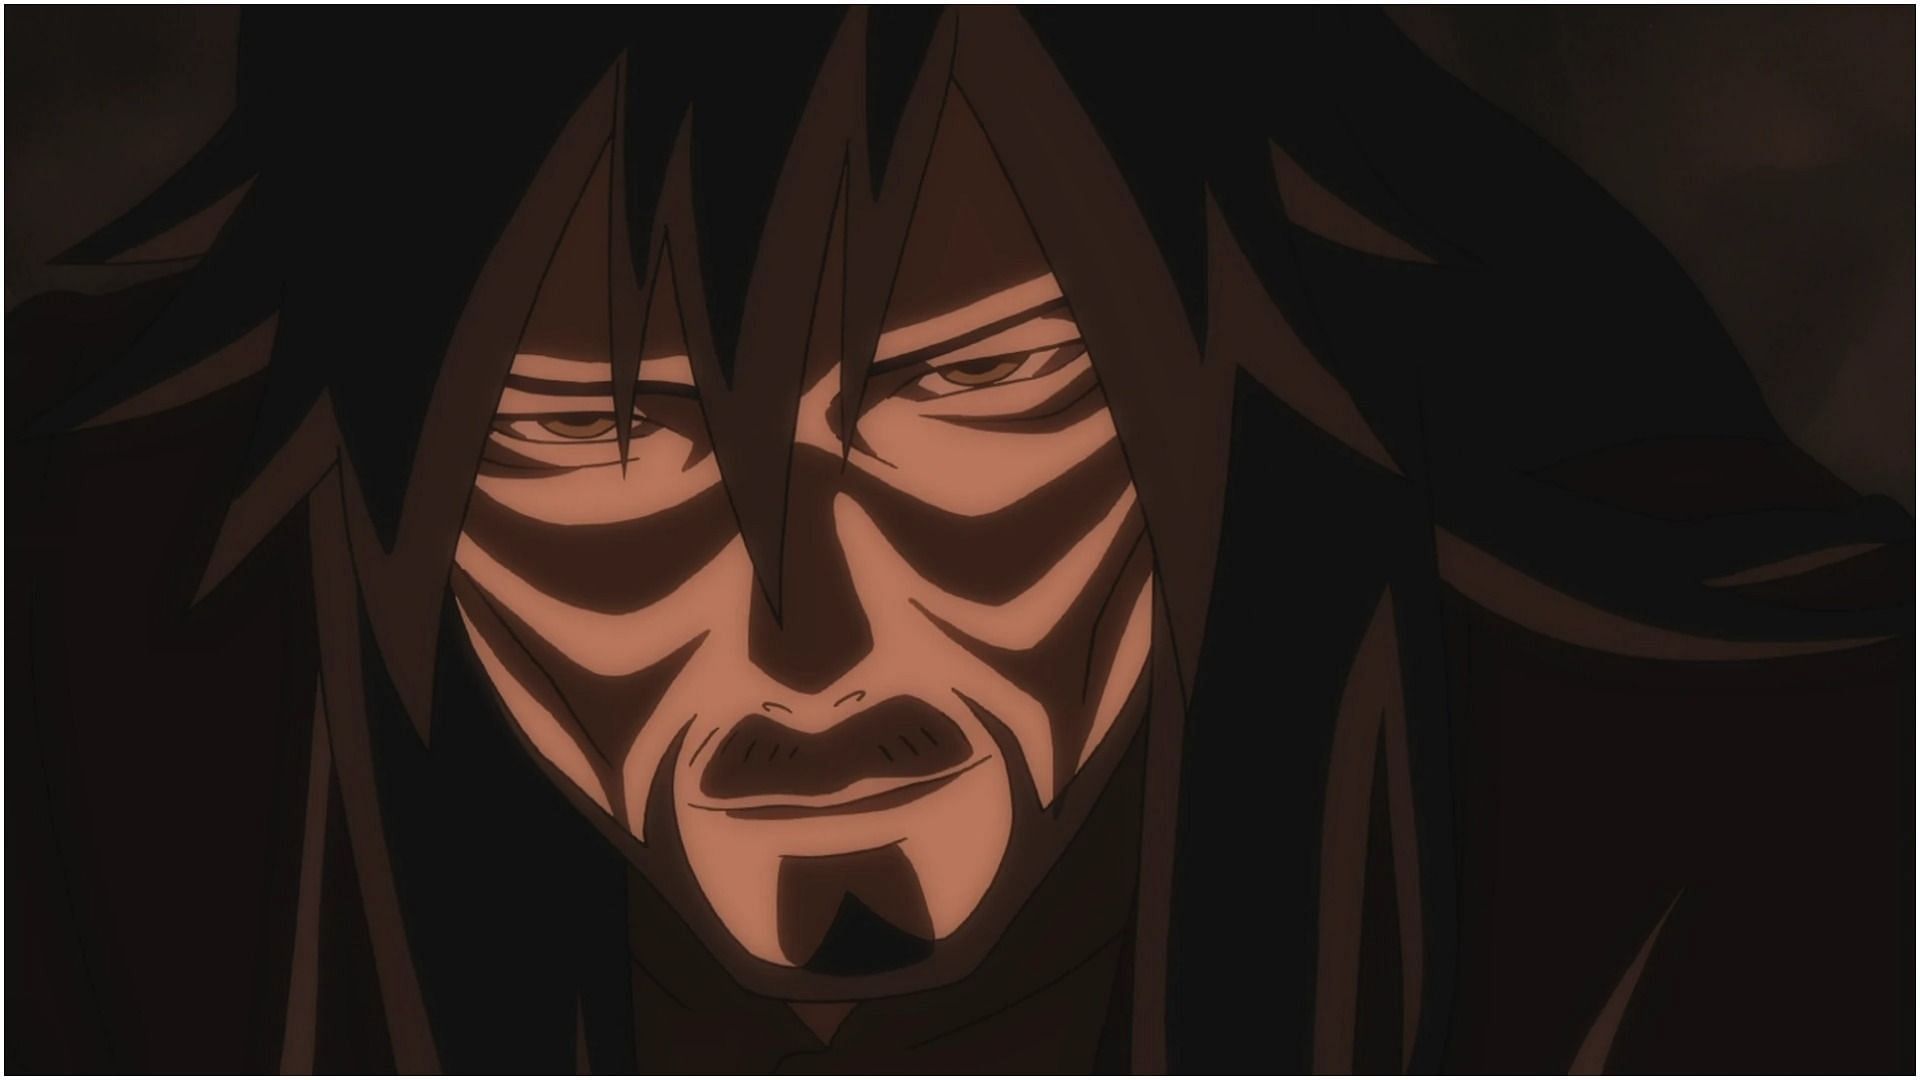 Yomi as seen in Naruto Shippūden the Movie (Image via Studio Pierrot)